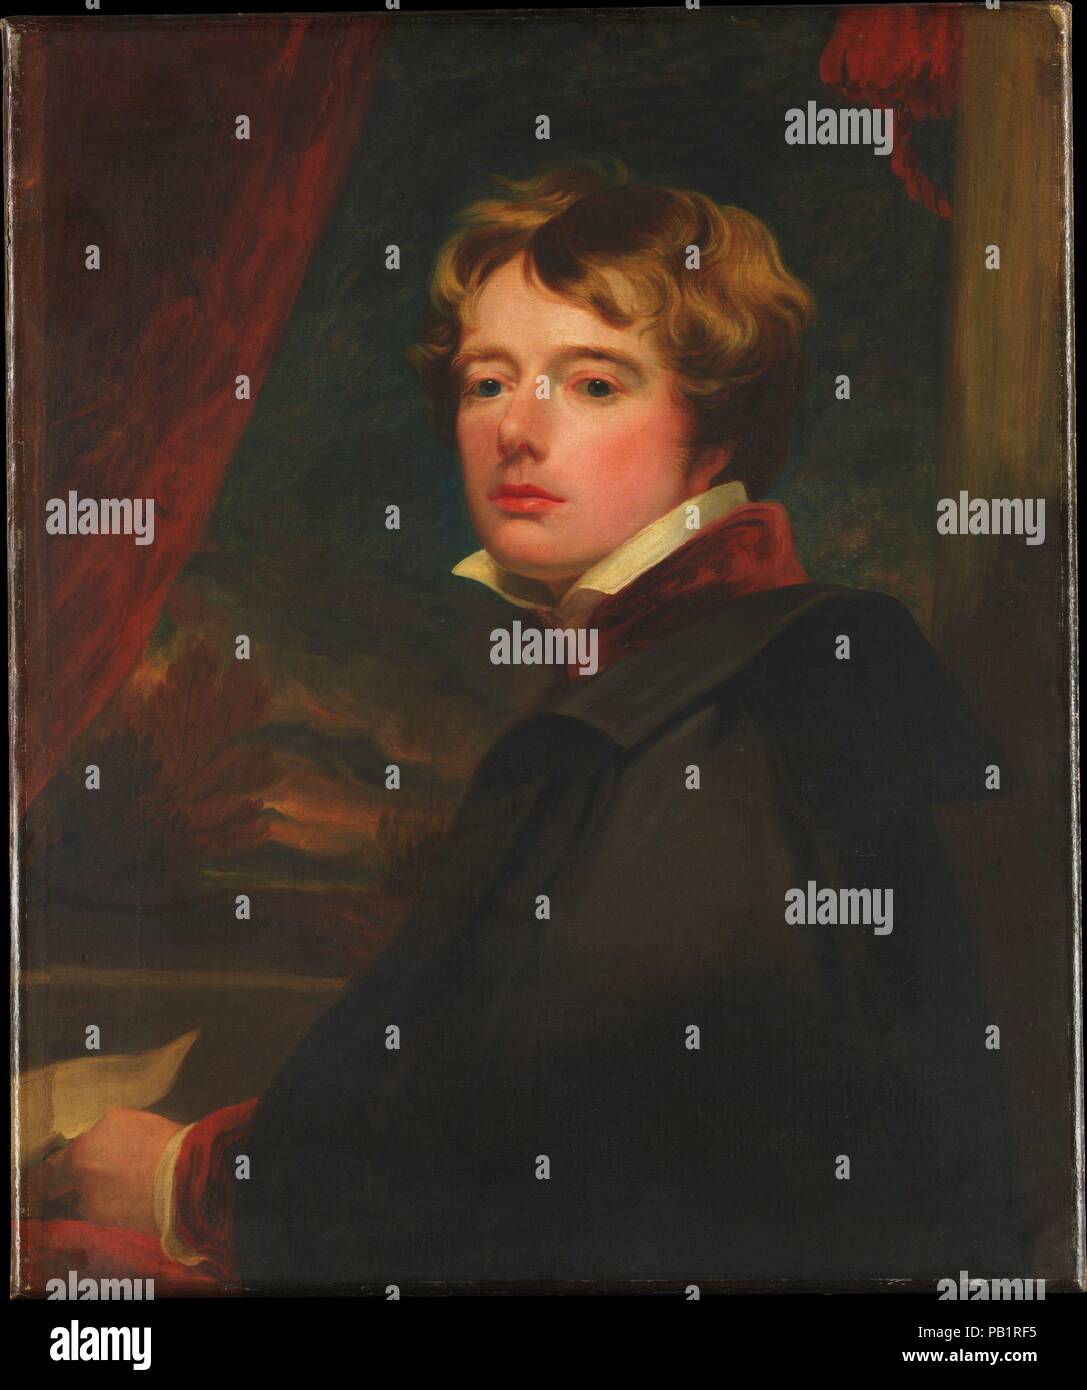 Self-Portrait. Artist: George Henry Harlow (British, London 1787-1819 London). Dimensions: 30 x 25 in. (76.2 x 63.5 cm). Museum: Metropolitan Museum of Art, New York, USA. Stock Photo